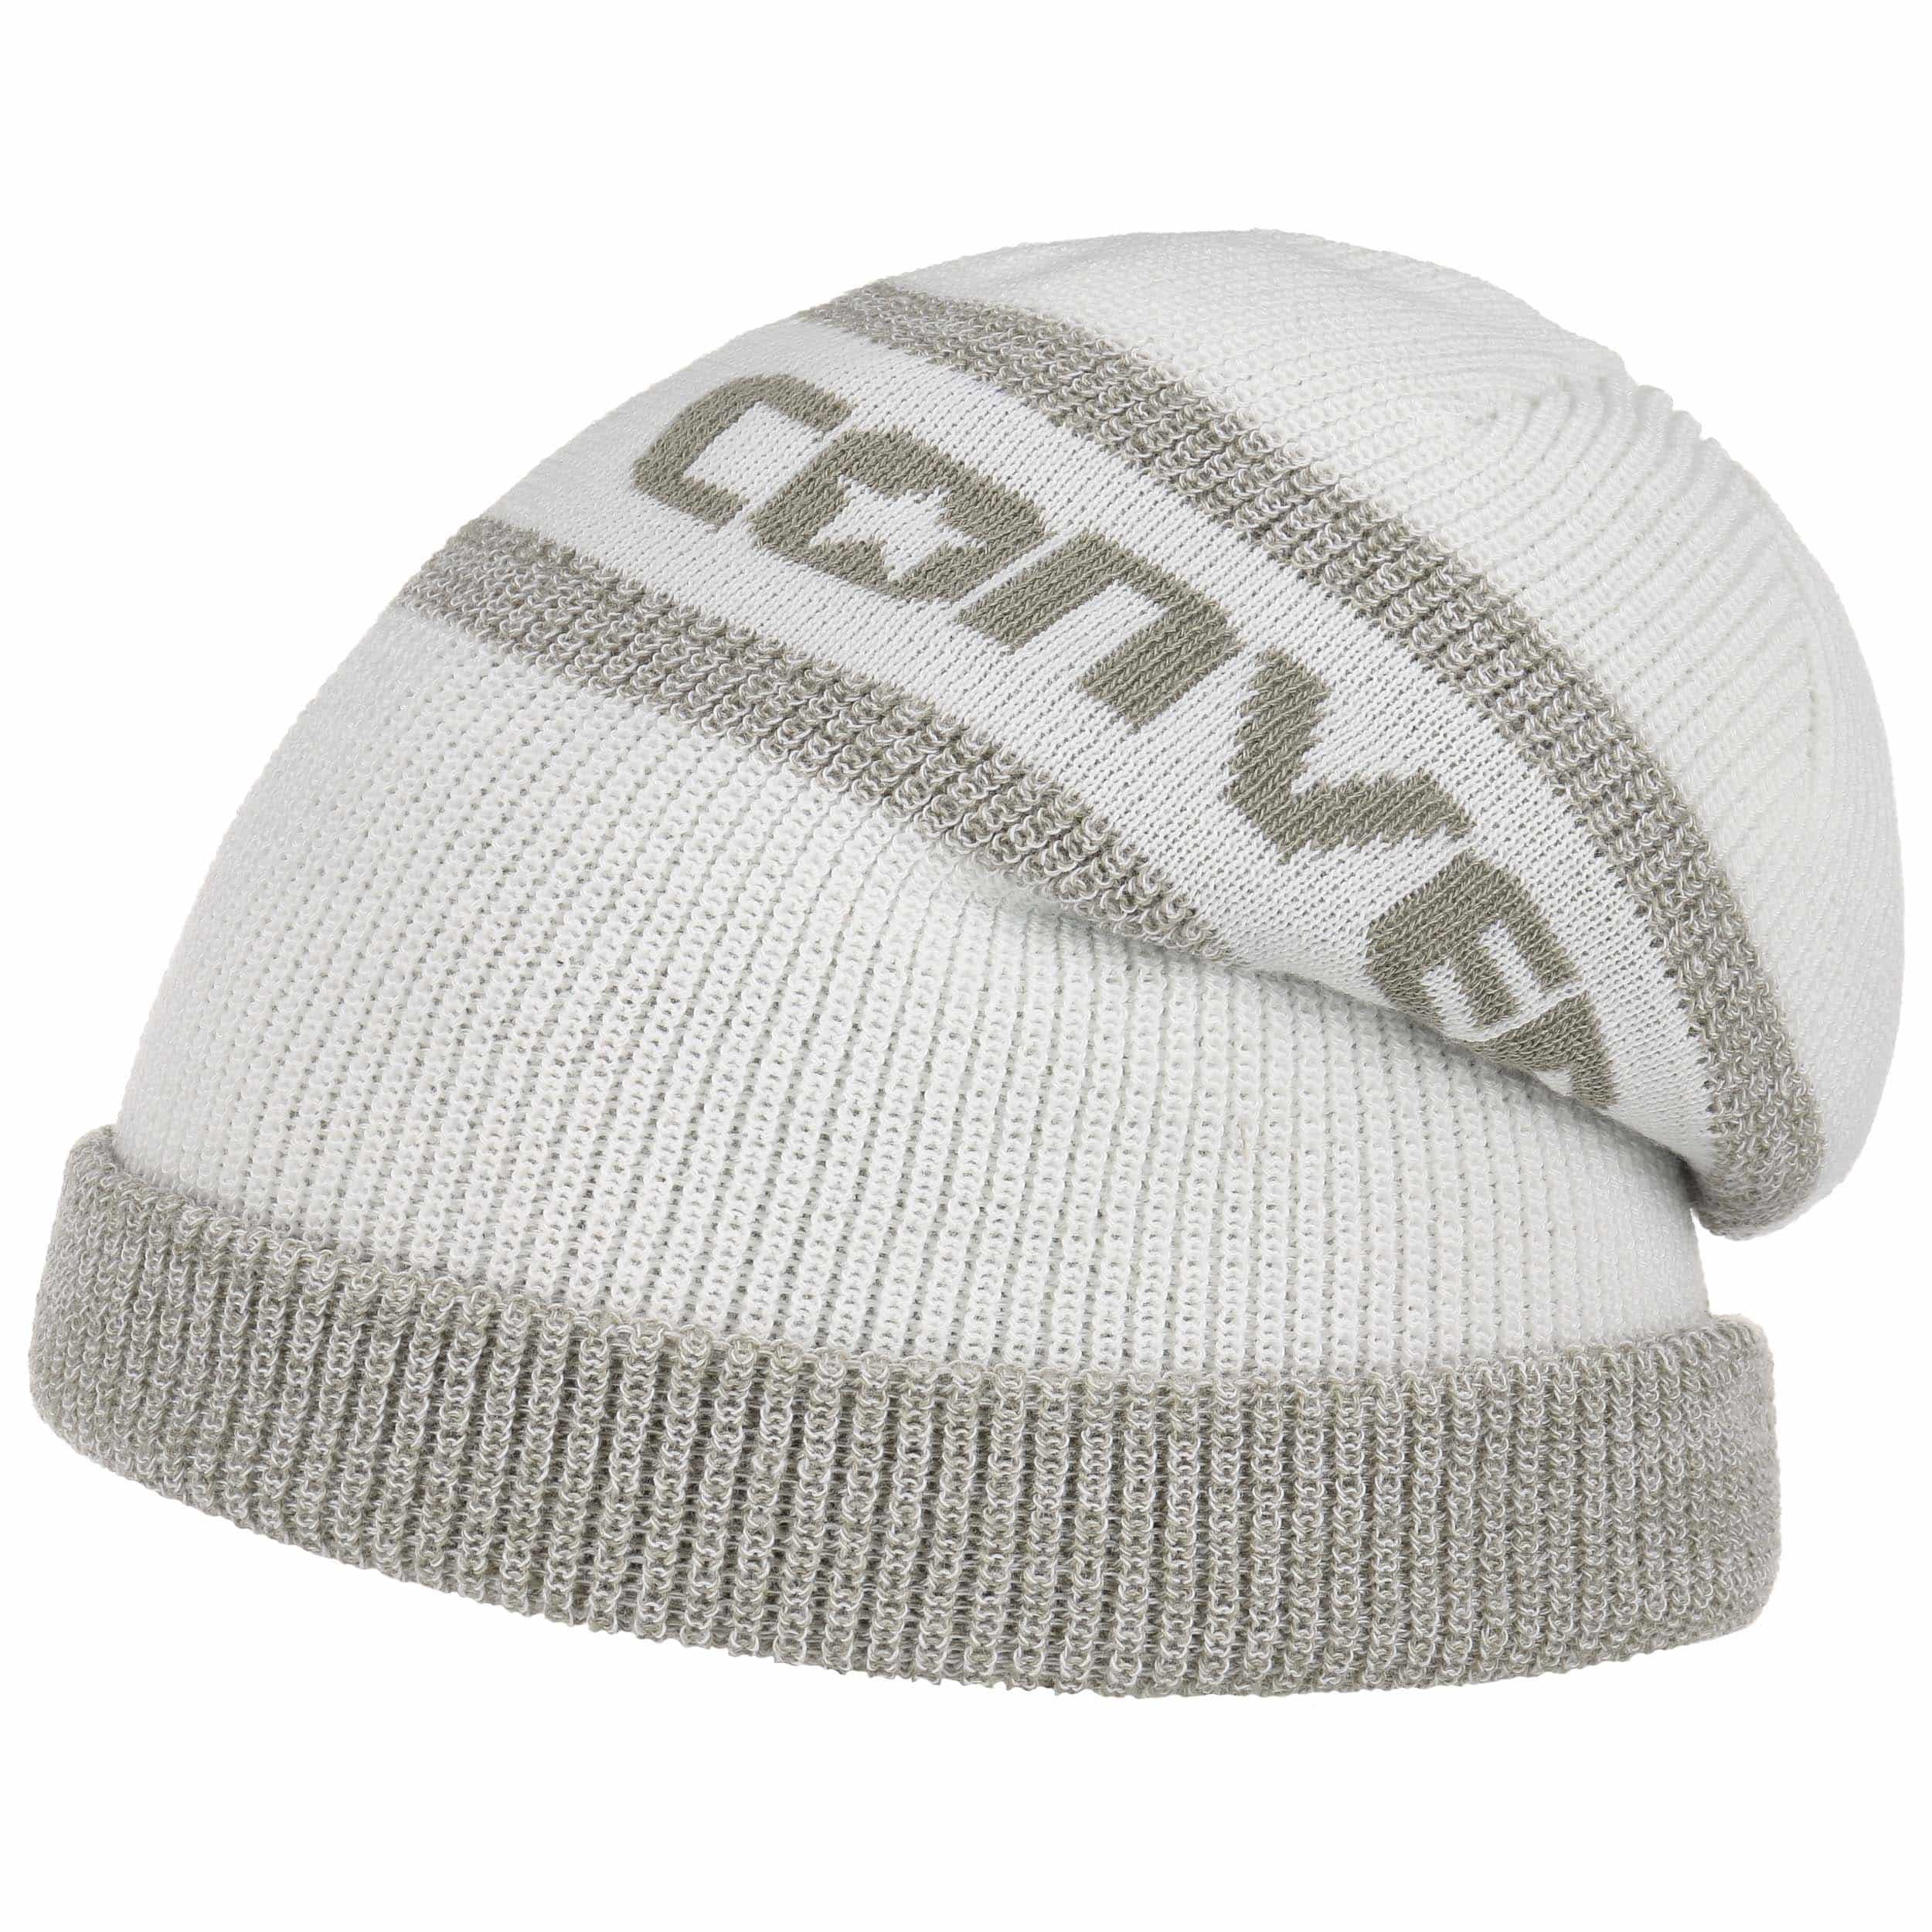 converse winter hat